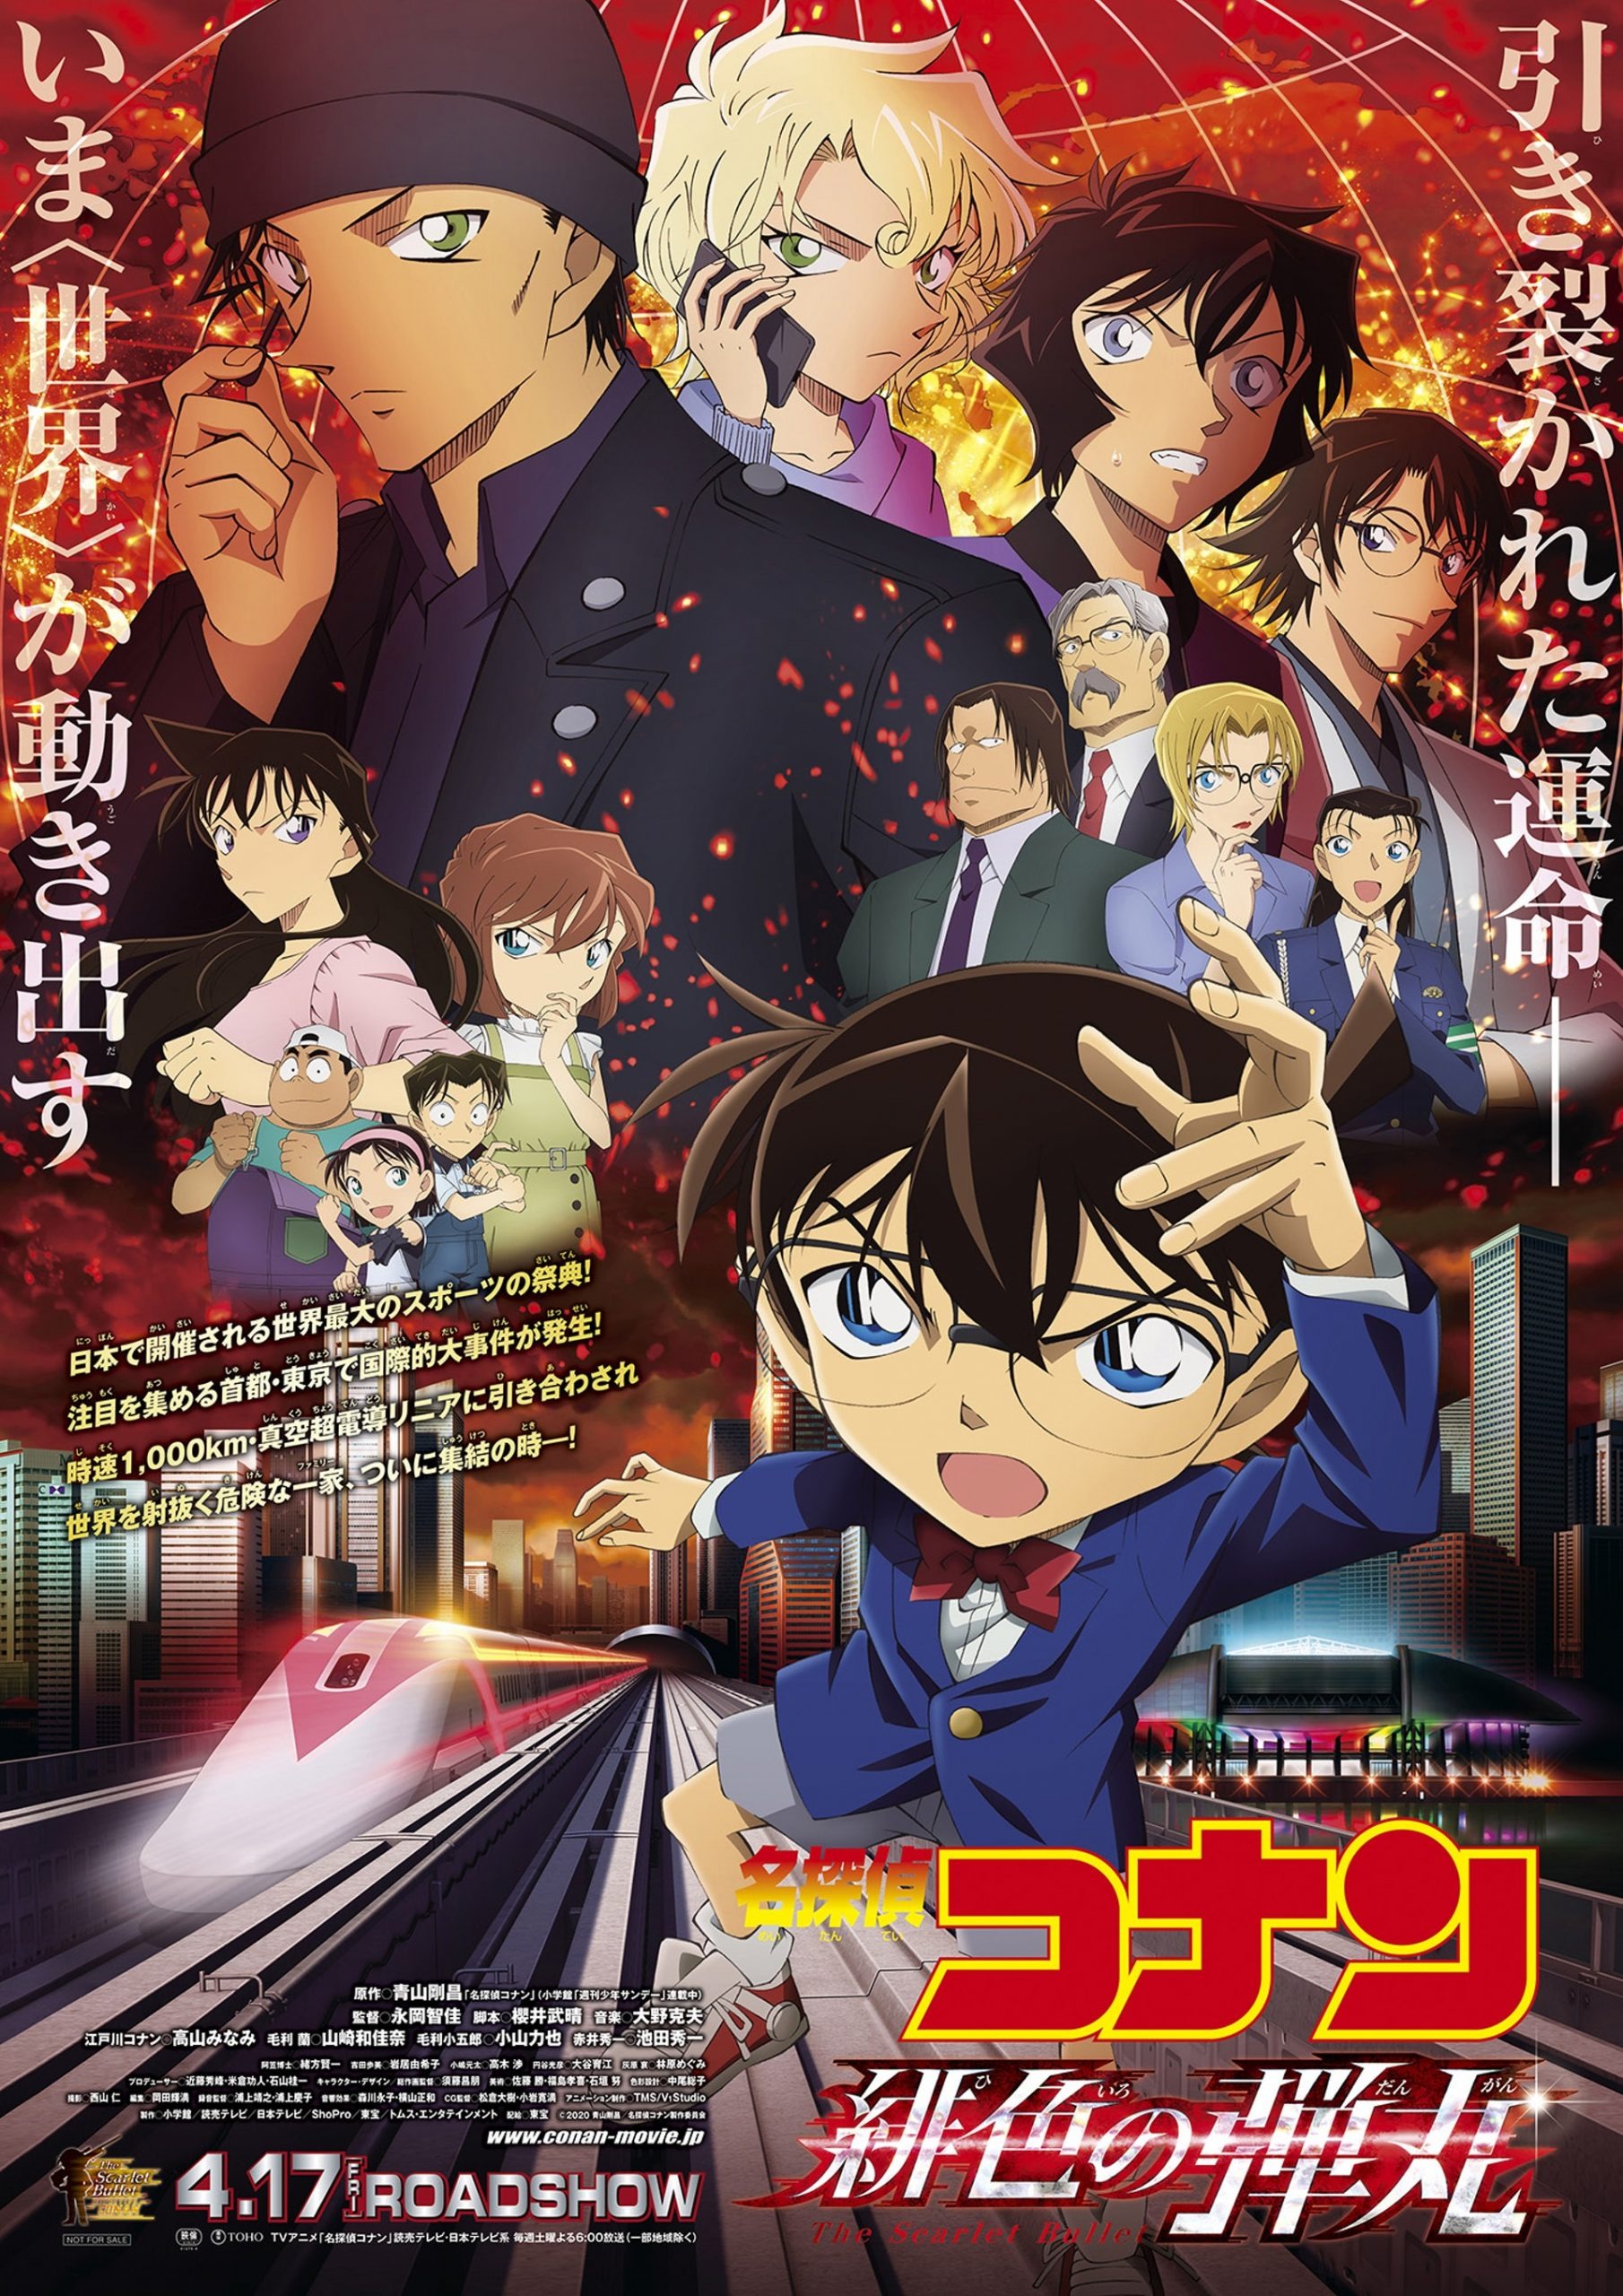 Mega Sized Movie Poster Image for Meitantei Conan: Hiiro no dangan 